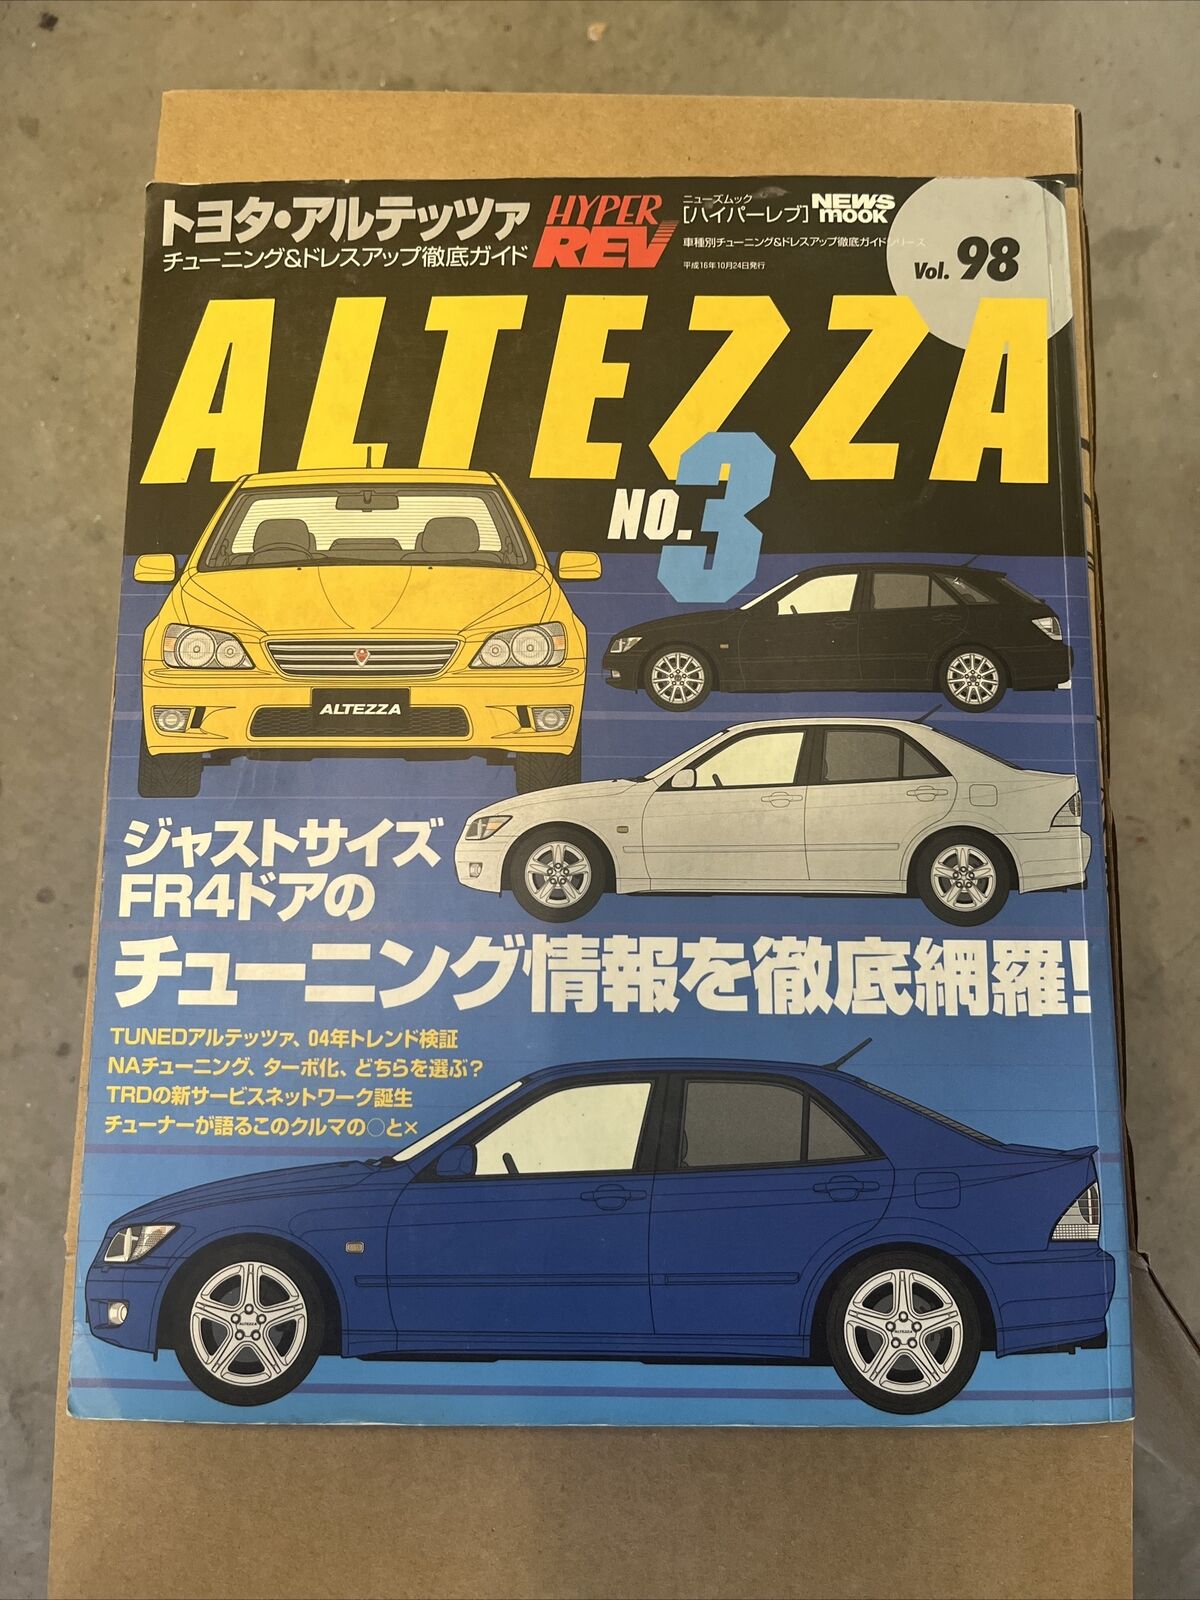 Altezza Hyper Rev Vol.98 Toyota SXE10 IS200 IS300 GXE10 Japan Book Magazine